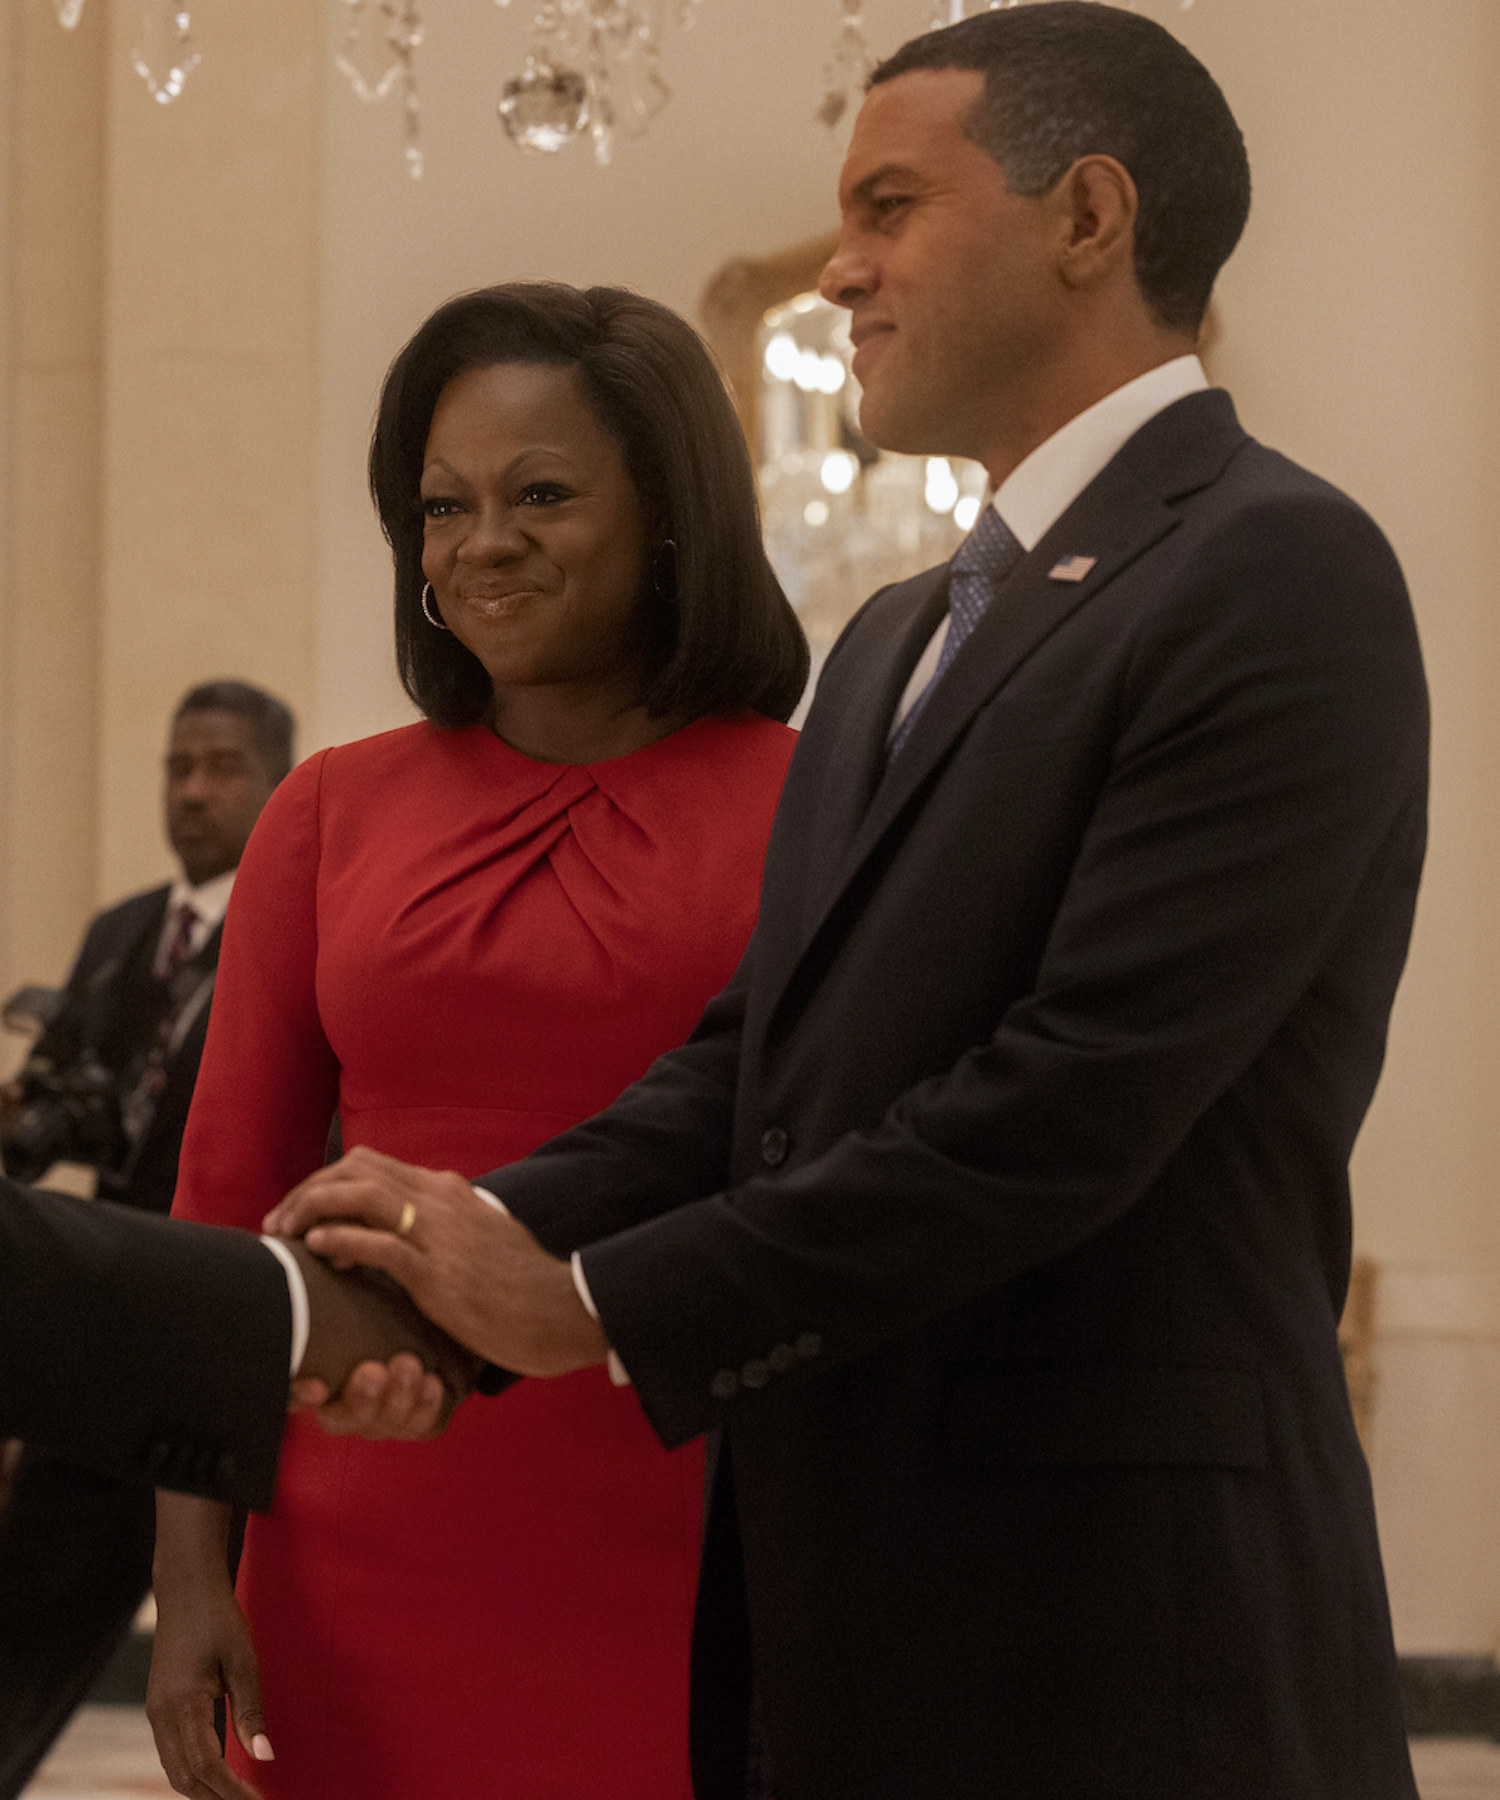 Davis as Michelle Obama and O-T Fagbenle as Barack Obama